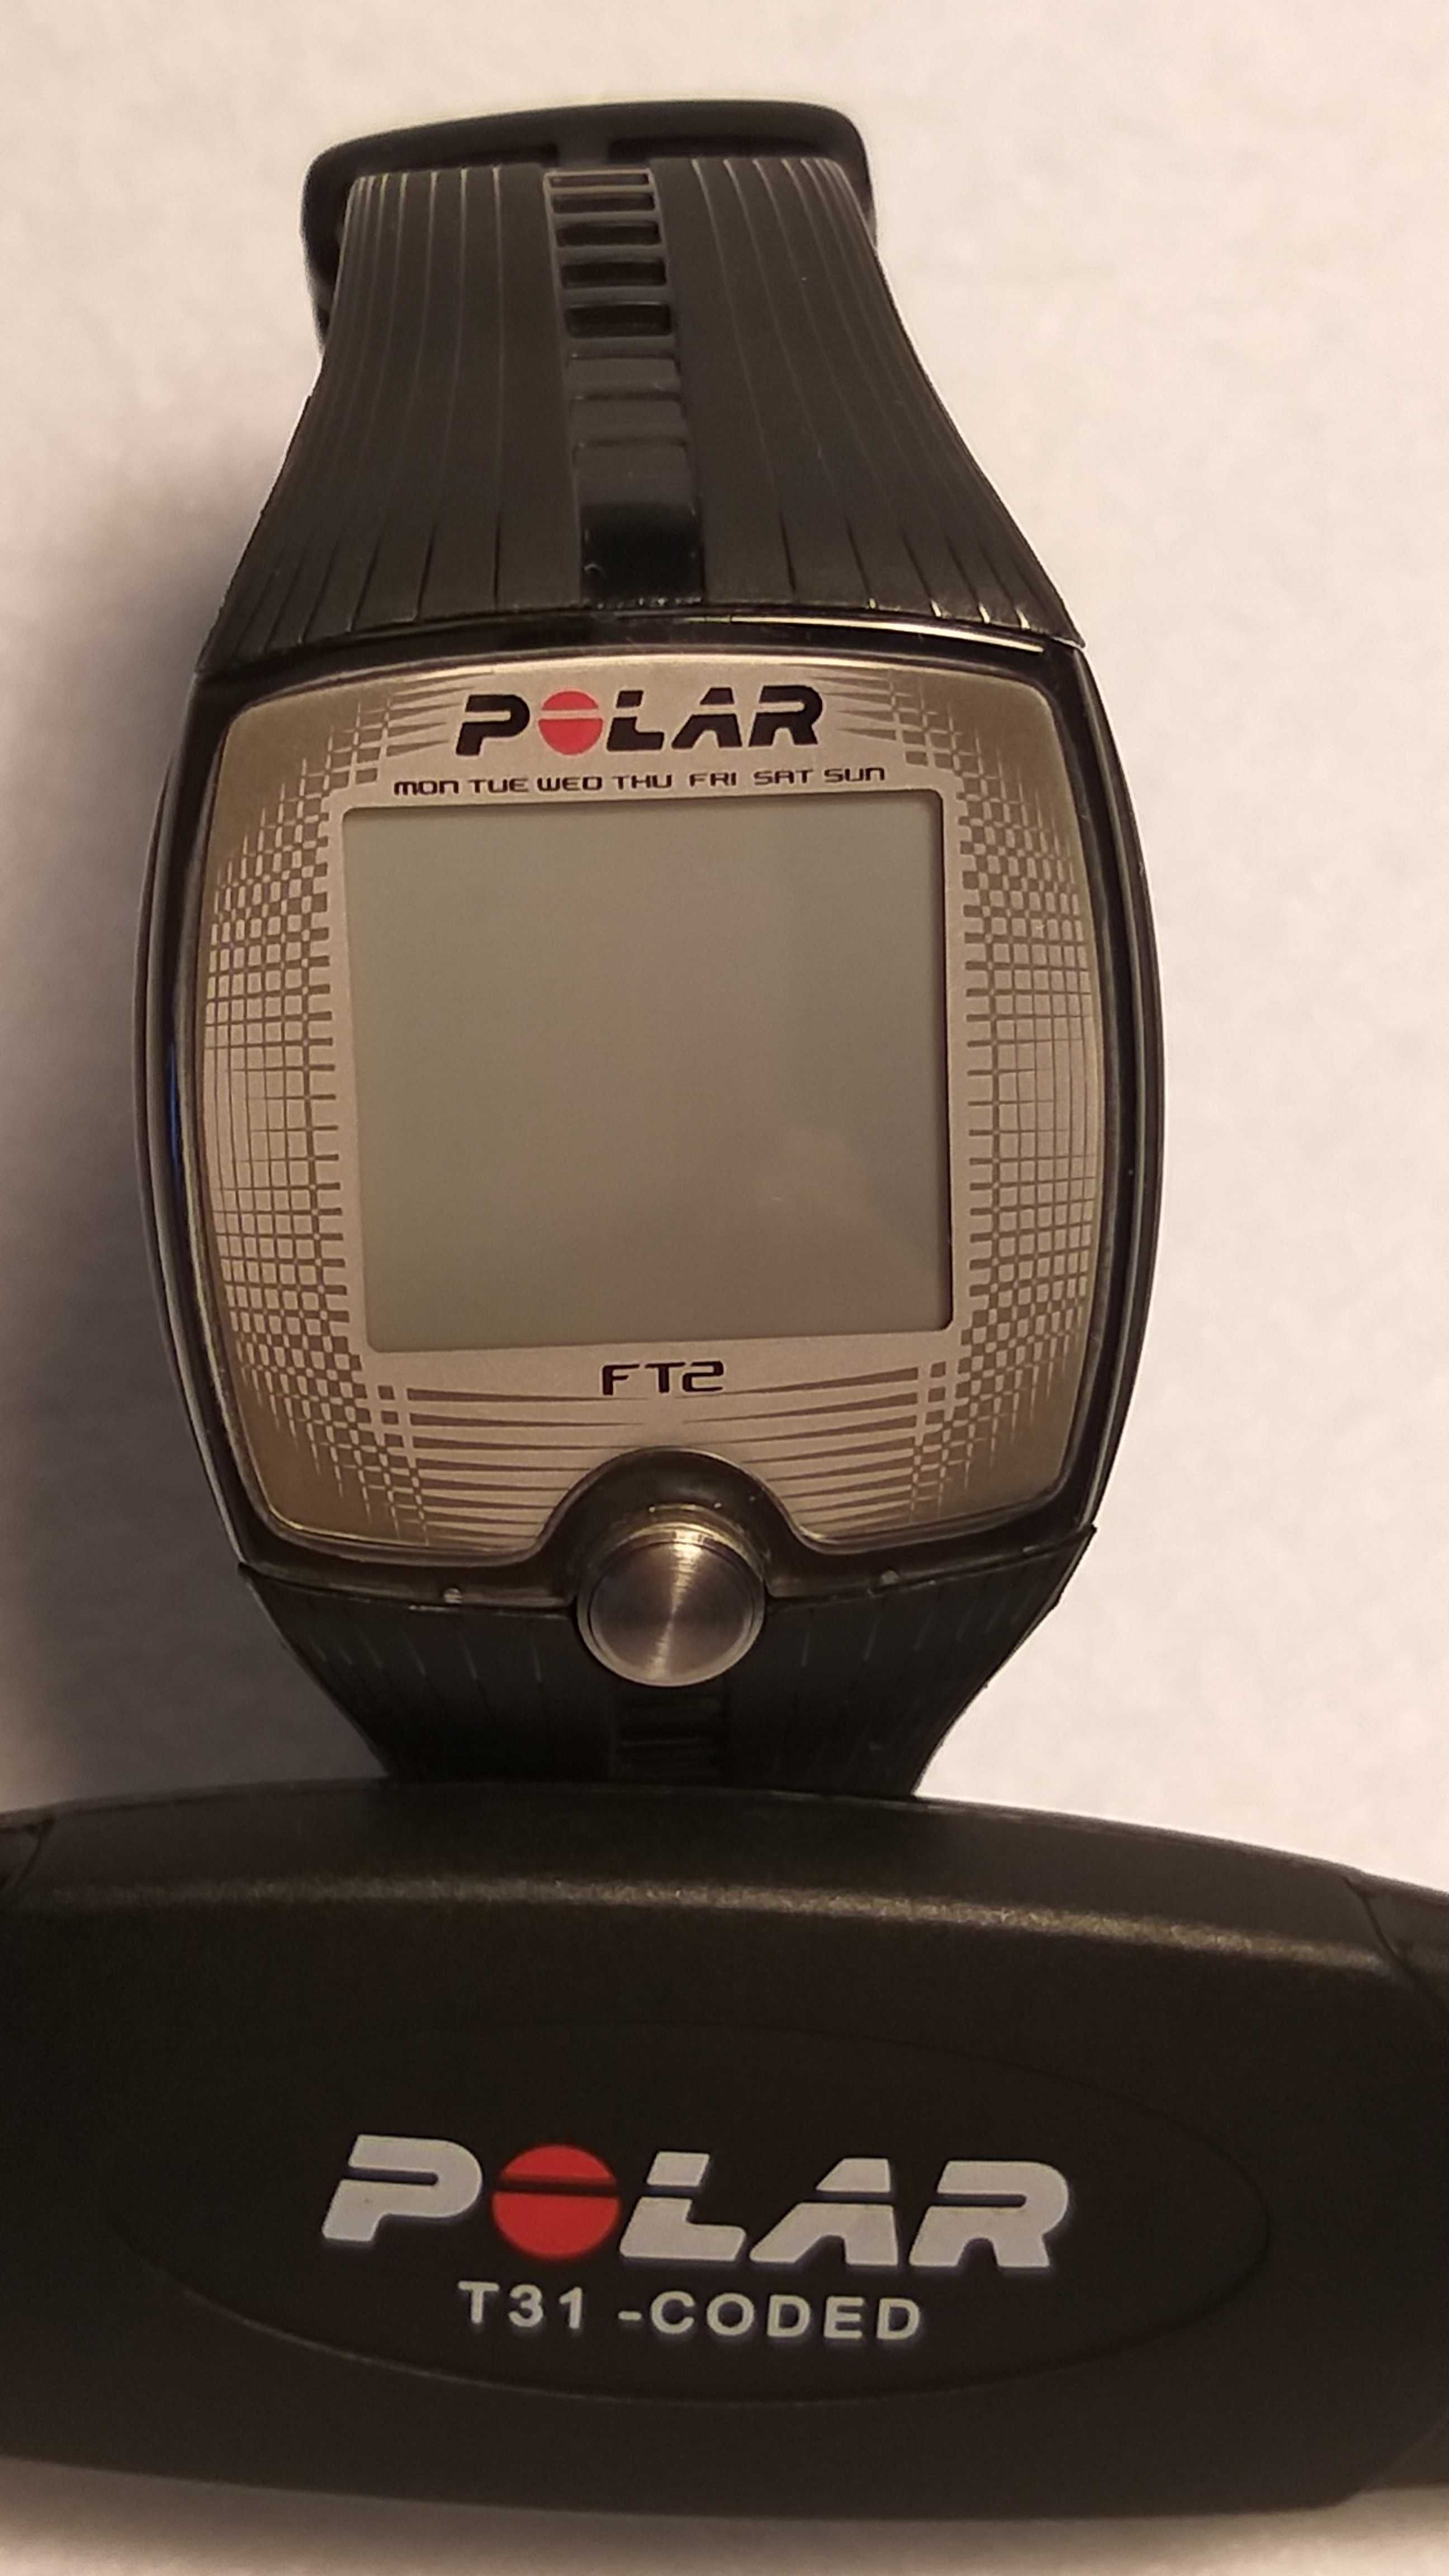 Ceas fitness monitorizare model Polar FT 2, second hand.